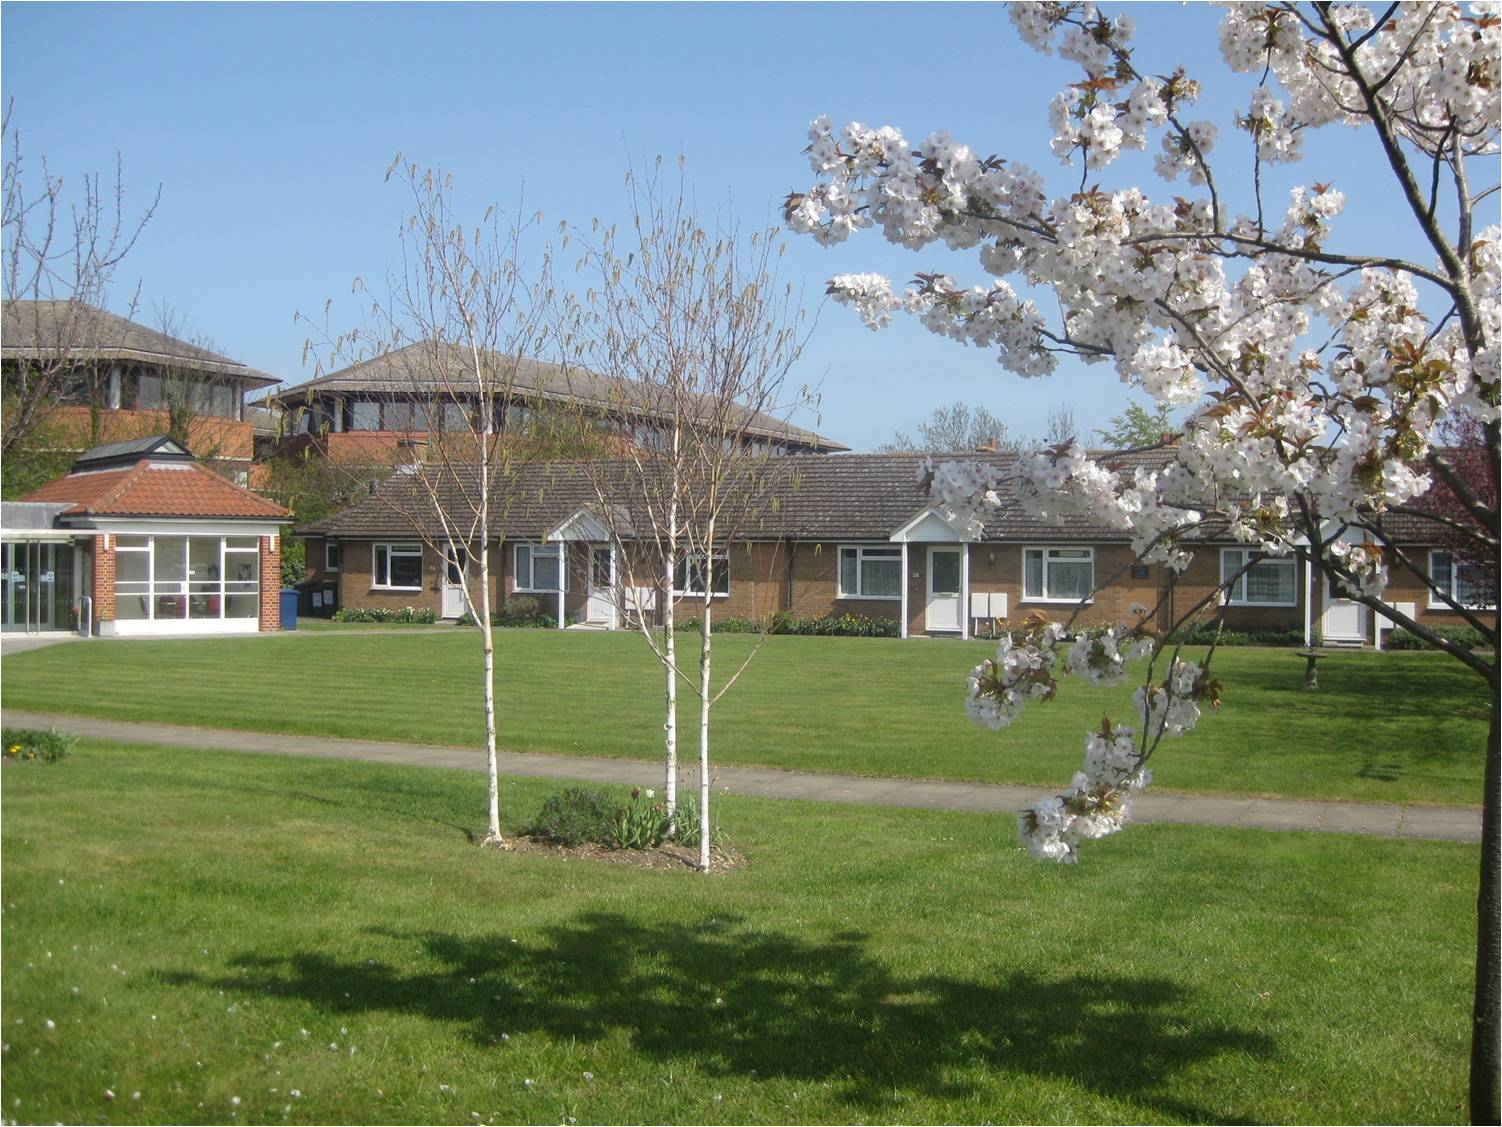 The green lawn at Cambridge Victoria Homes